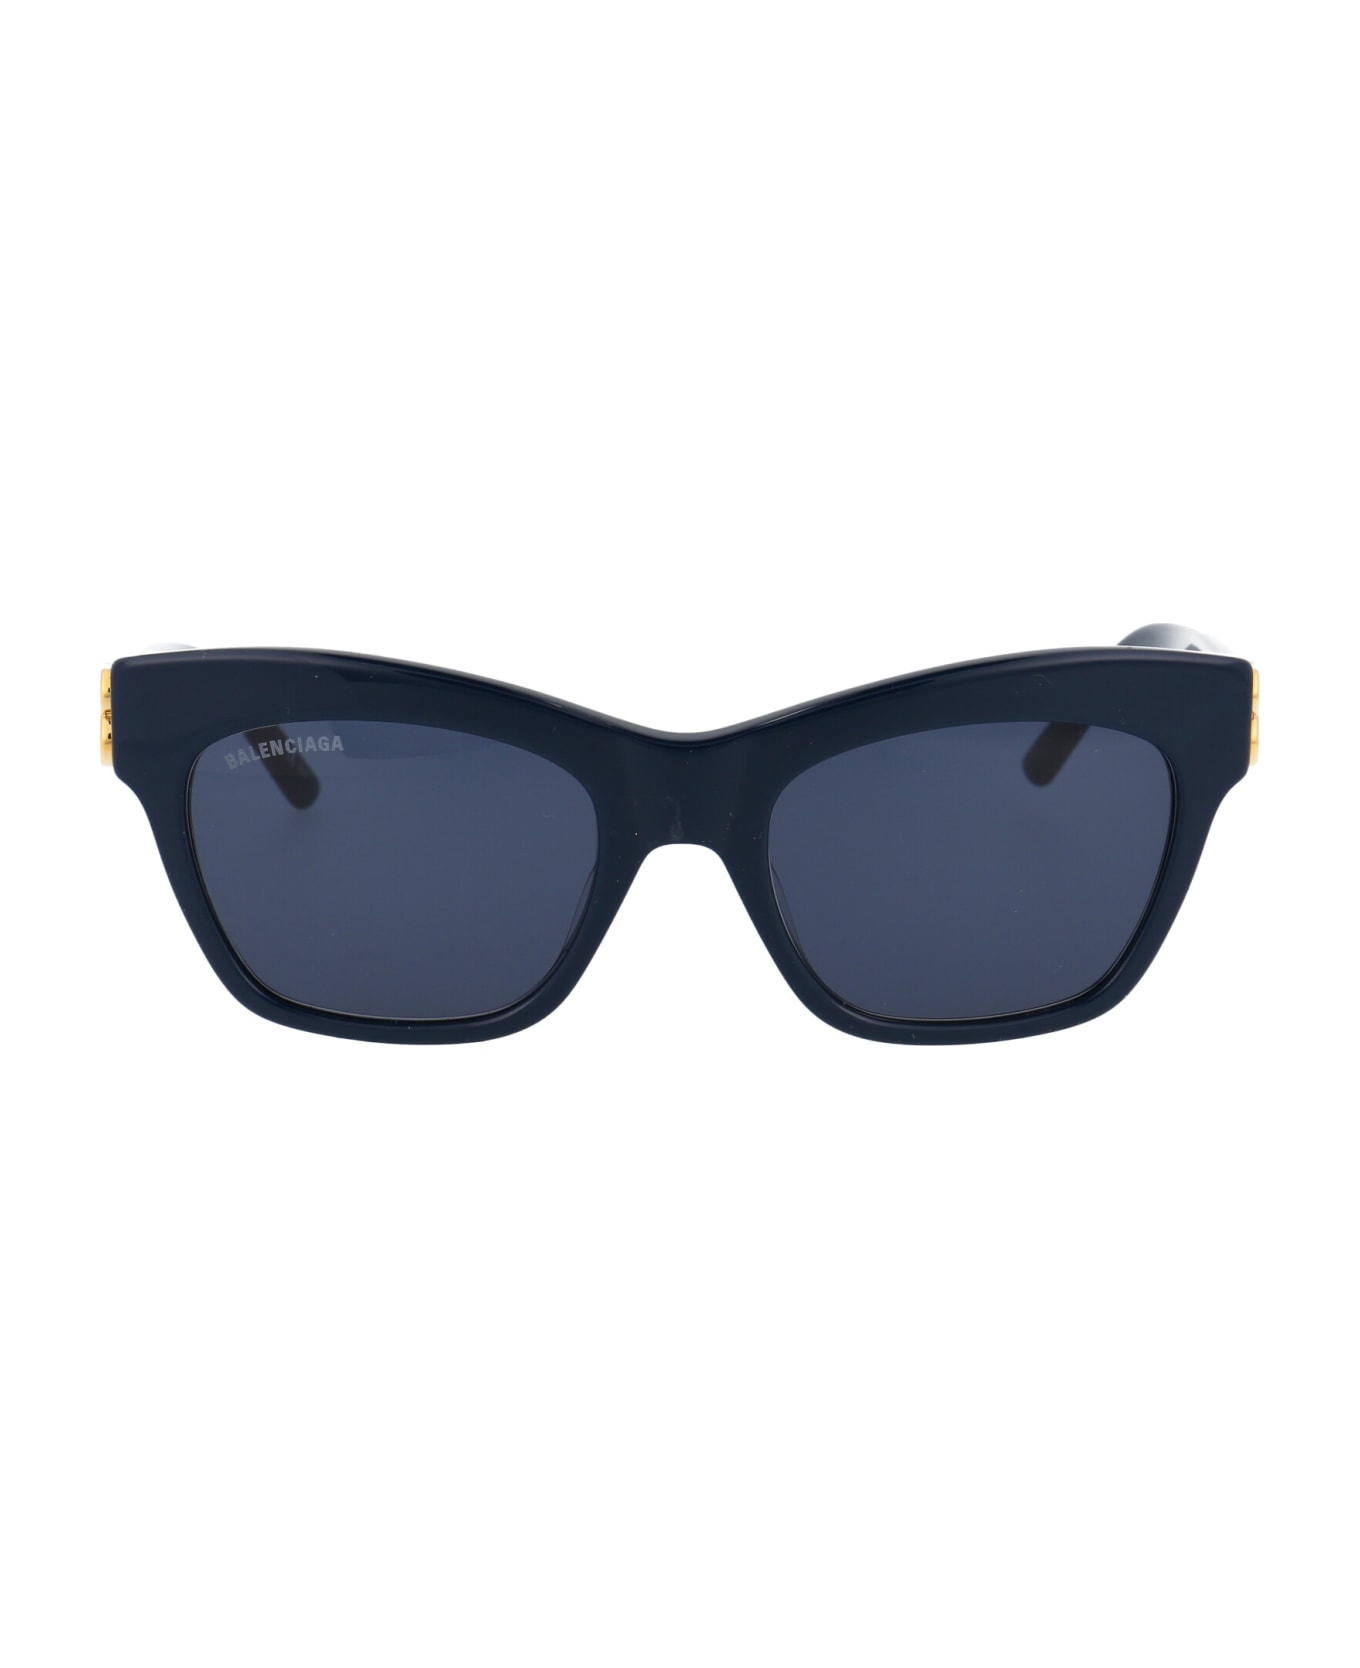 Balenciaga Eyewear Bb0132s Sunglasses - 007 BLUE GOLD BLUE サングラス